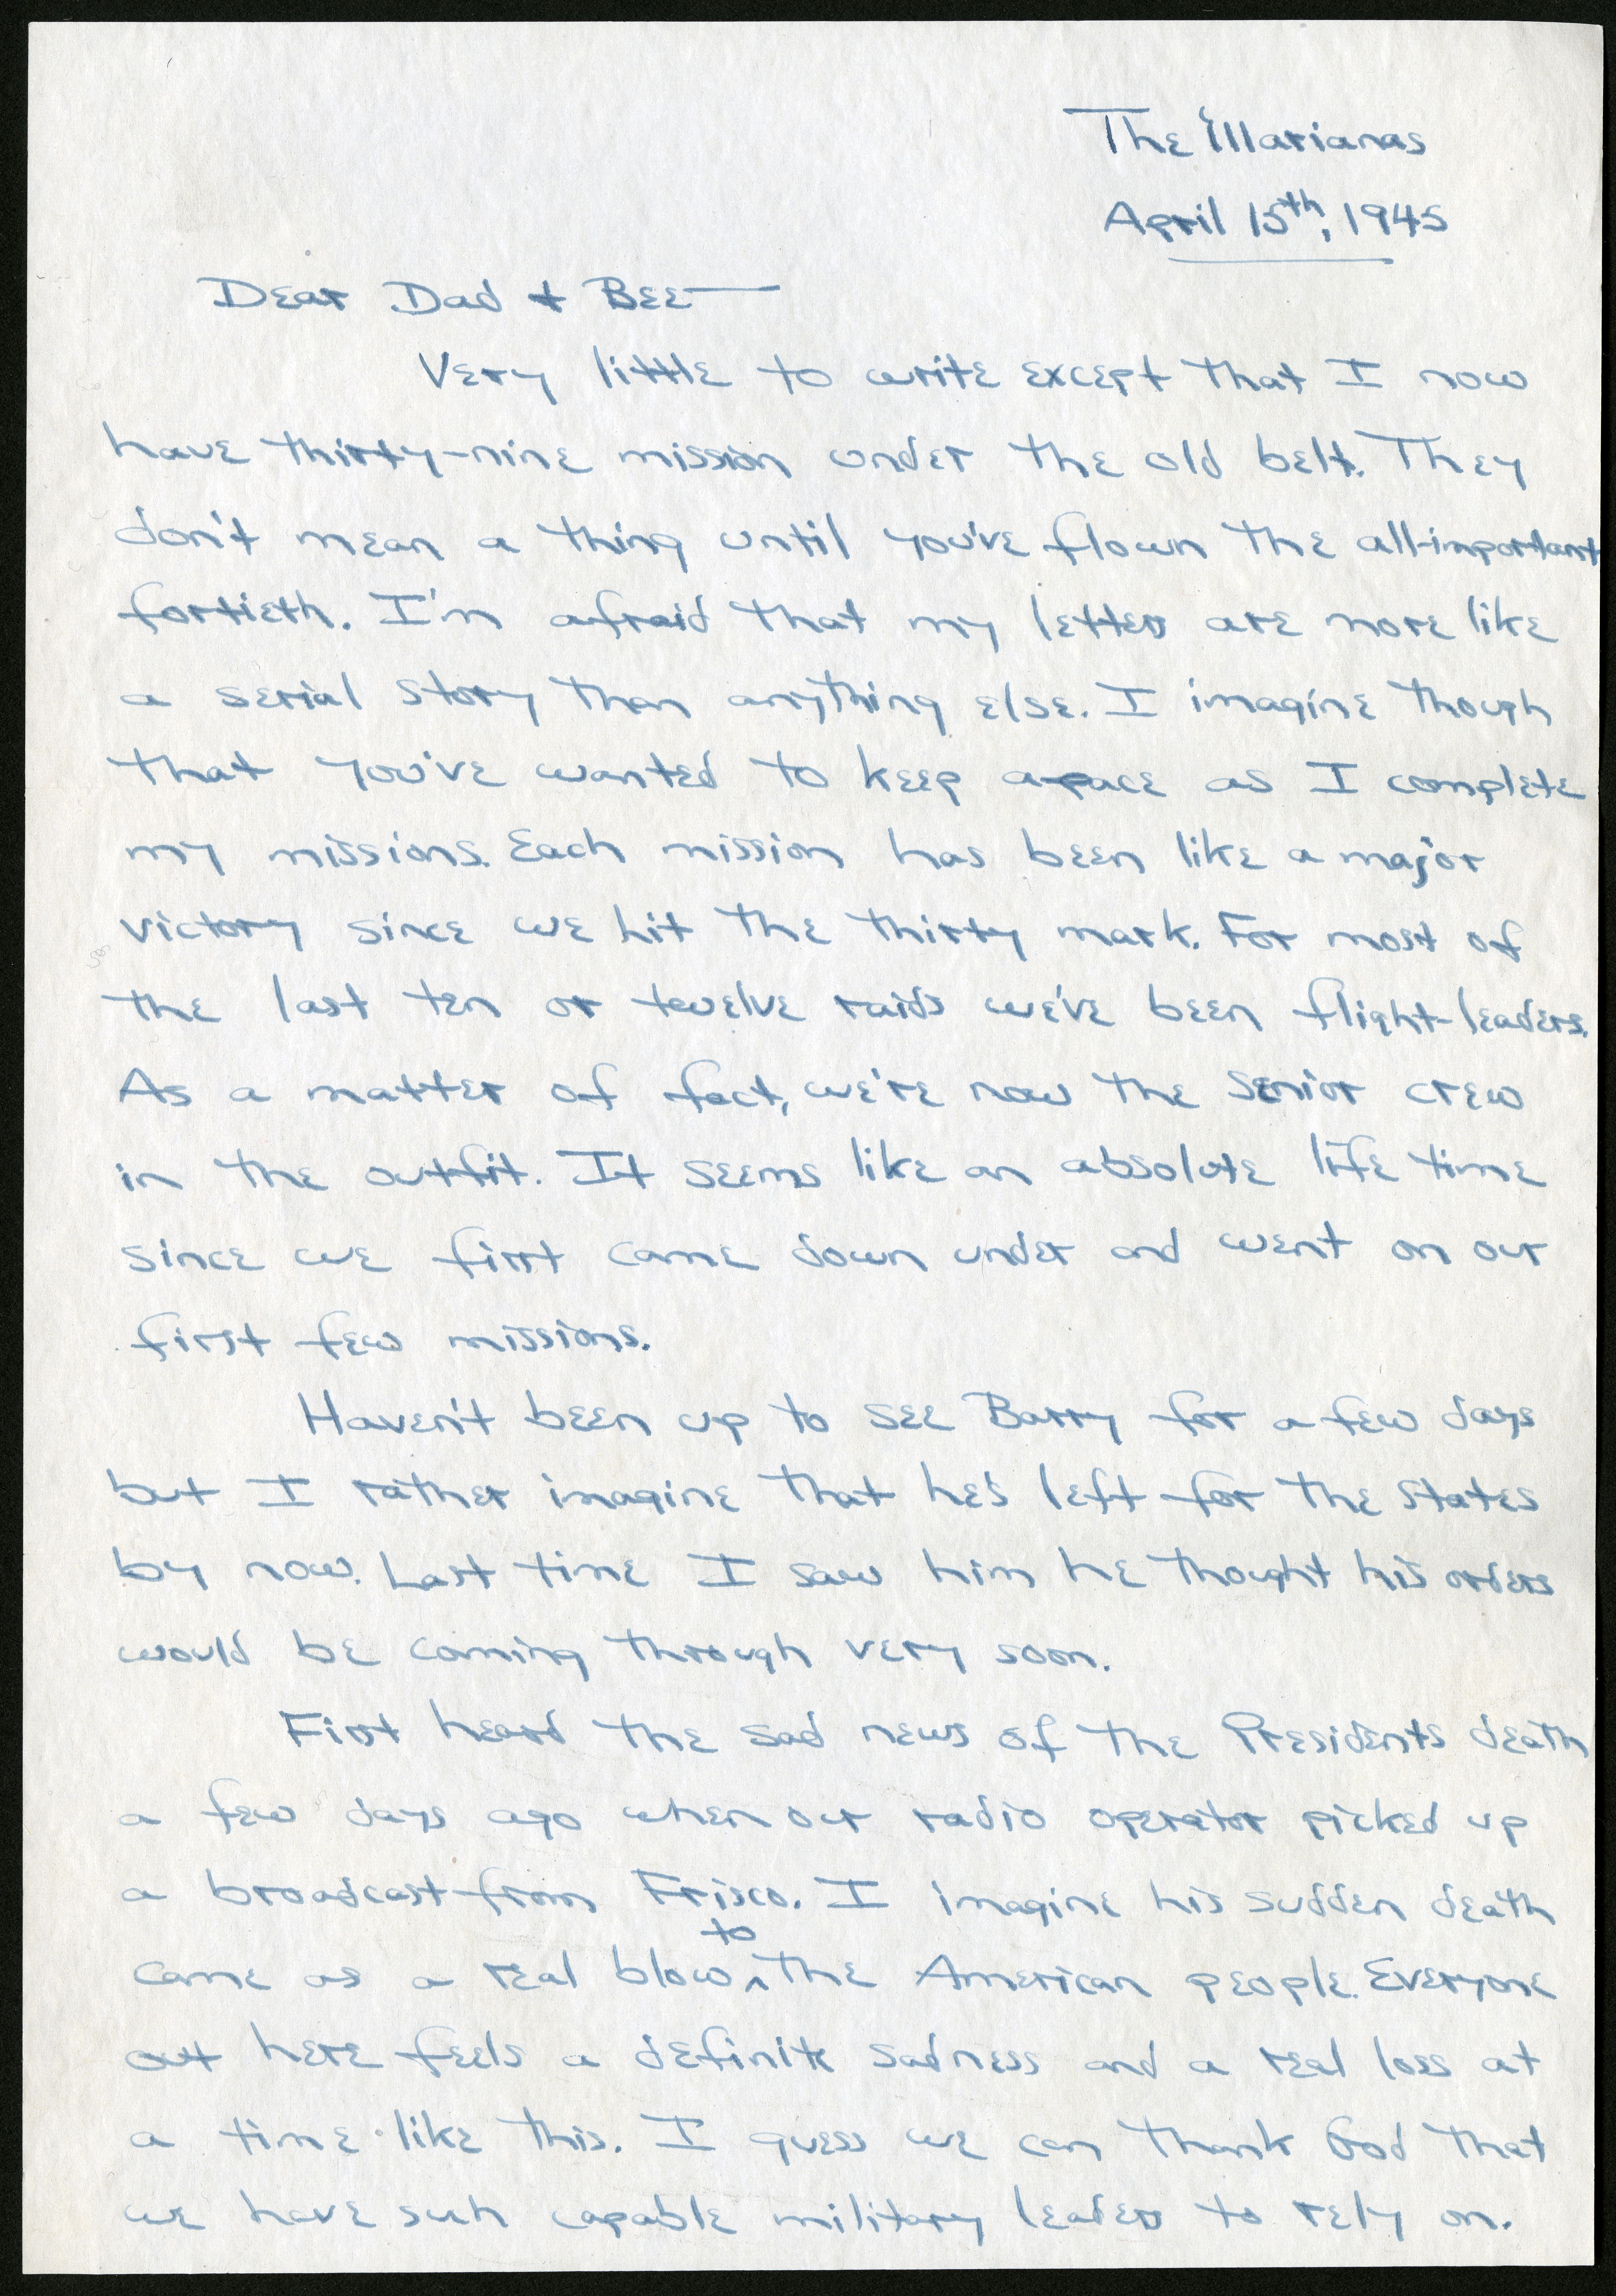 Robert L. Stone to Jacob Stone and Beatrice Stone, April 15, 1945. (The Gilder Lehrman Institute, GLC09620.173 p1)